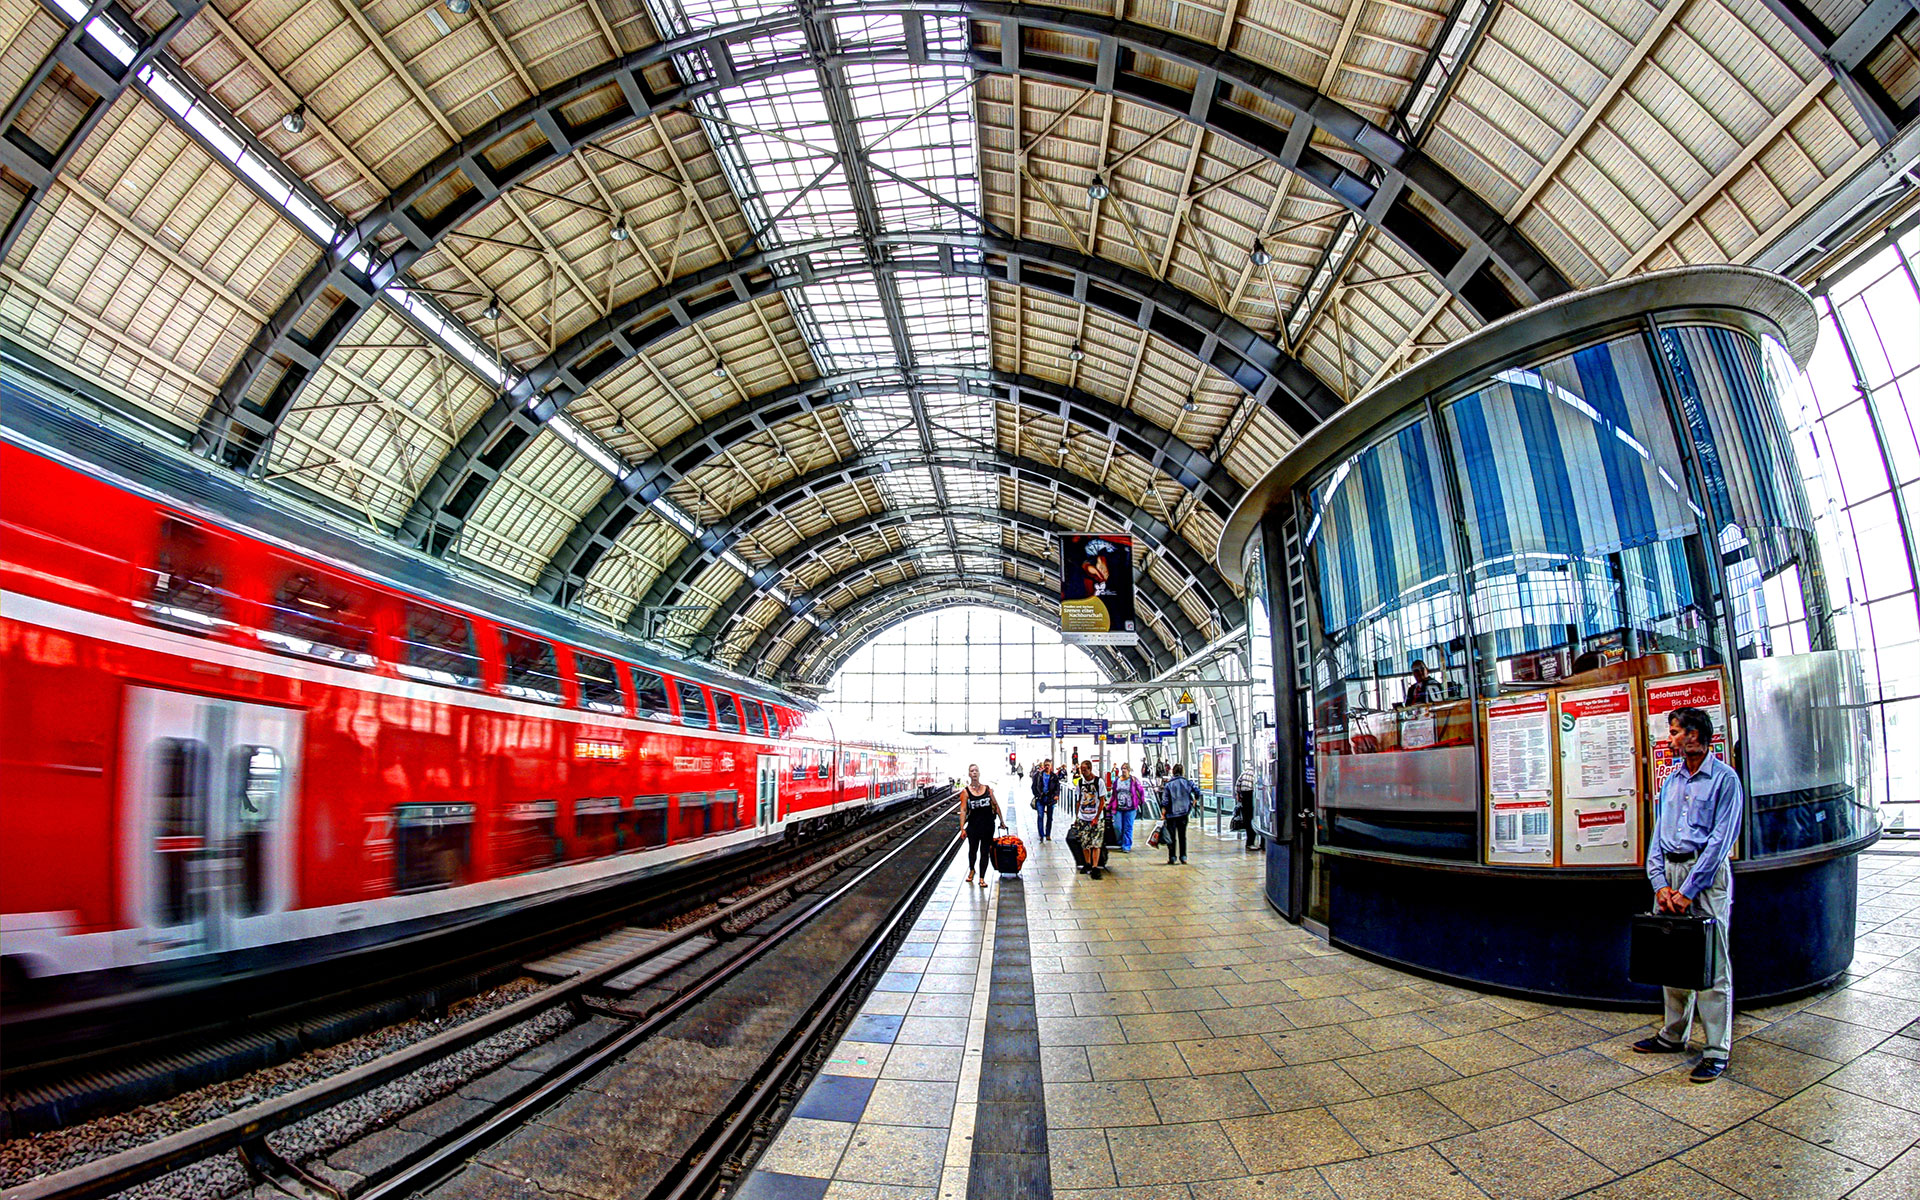 One of Deutsche Bahn’s red regional double-deck trains dashing through a Berlin station (photo © Andrea Calistri).